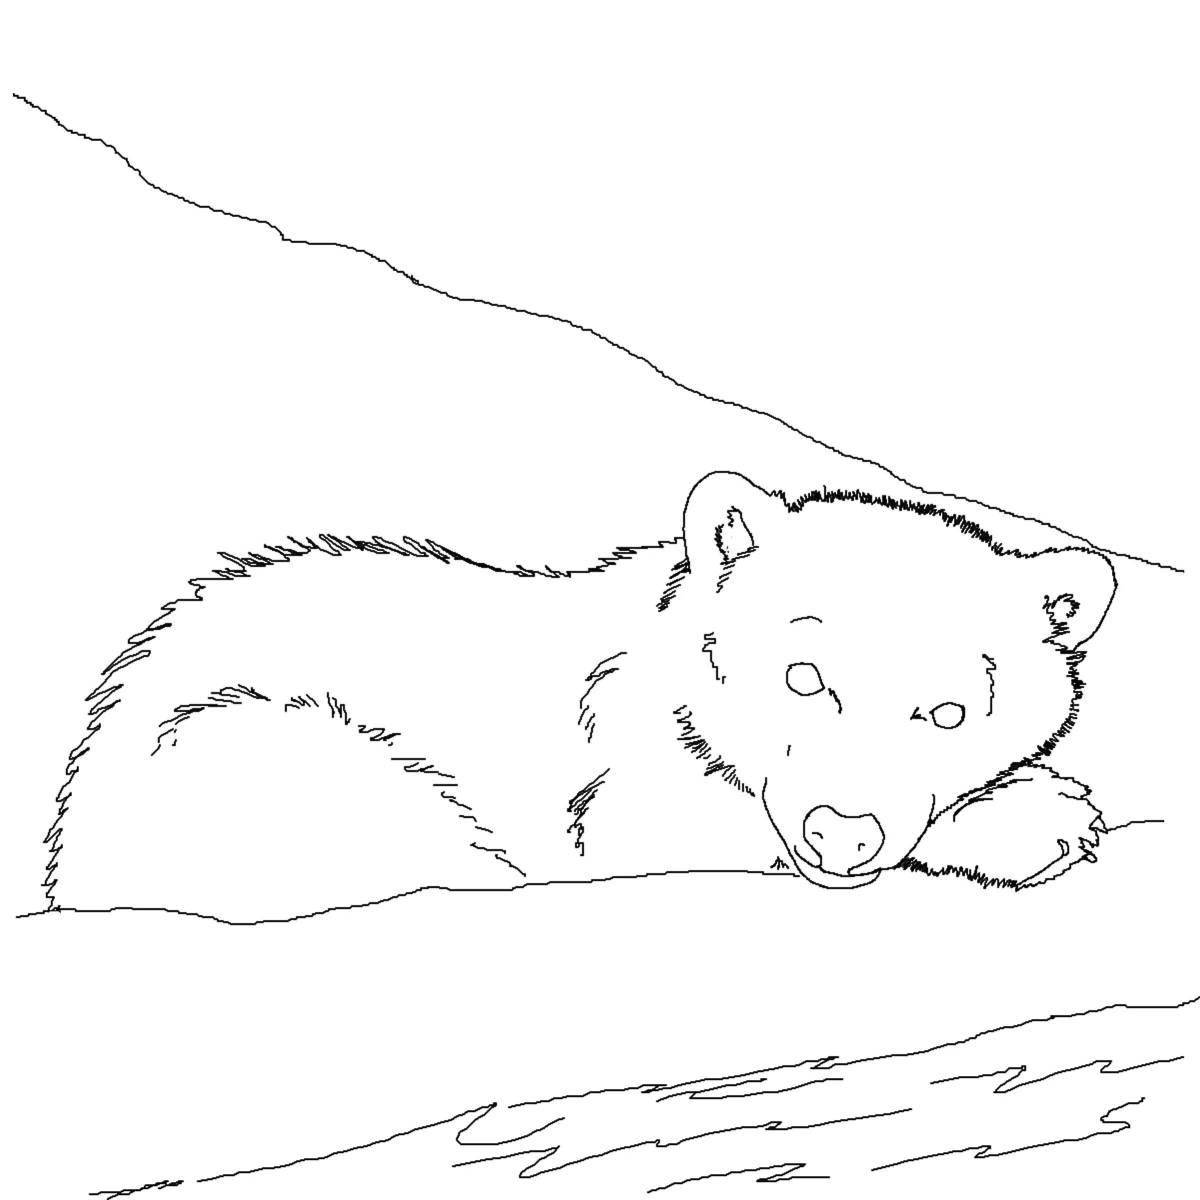 Colouring an inquisitive bear in a den